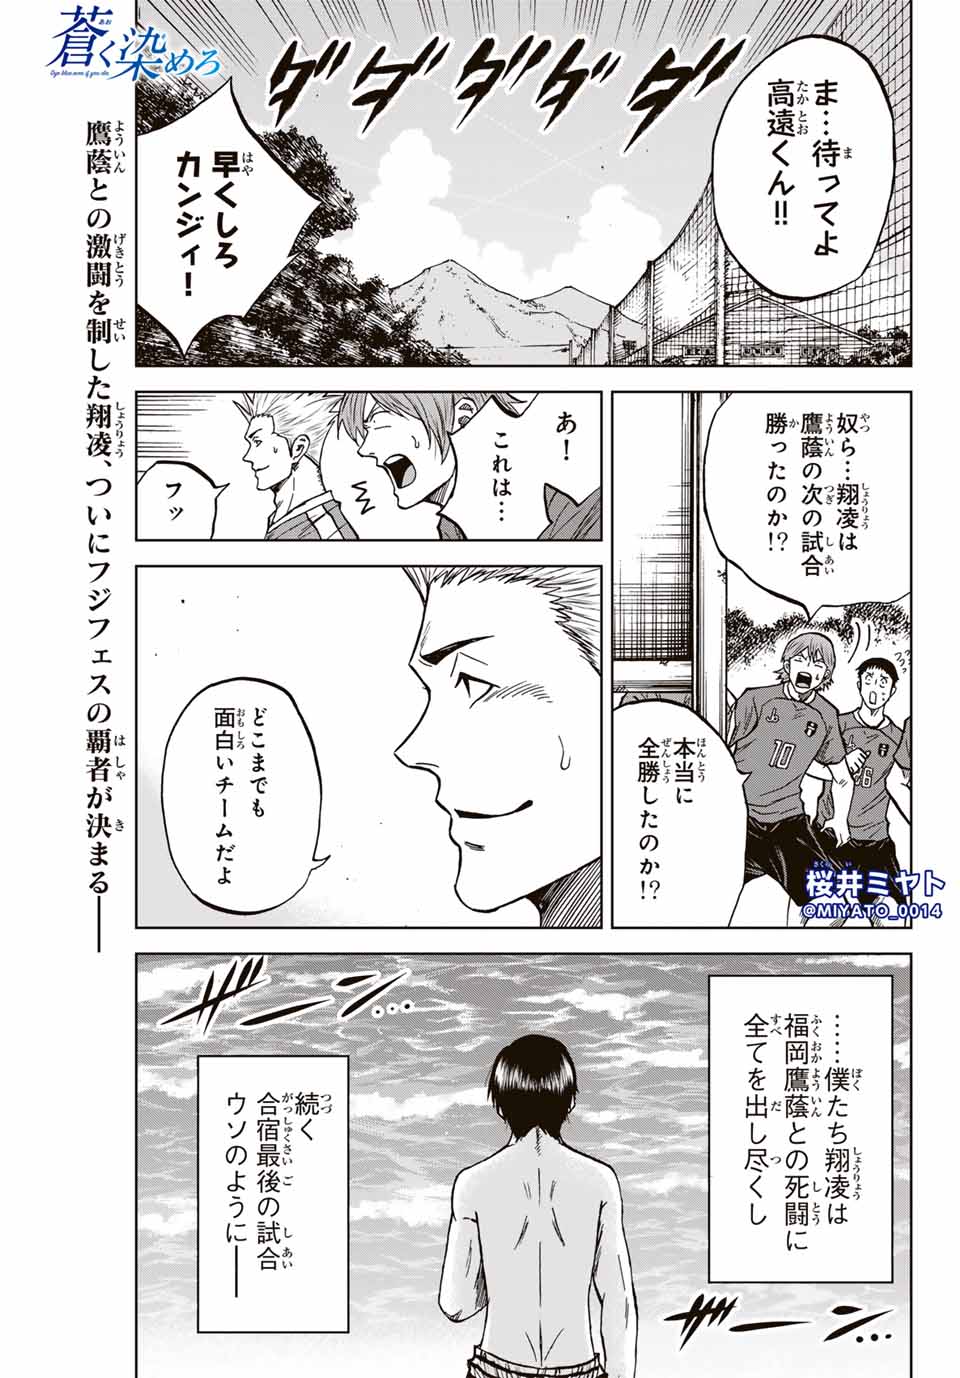 Aoku Somero - Chapter 112 - Page 1